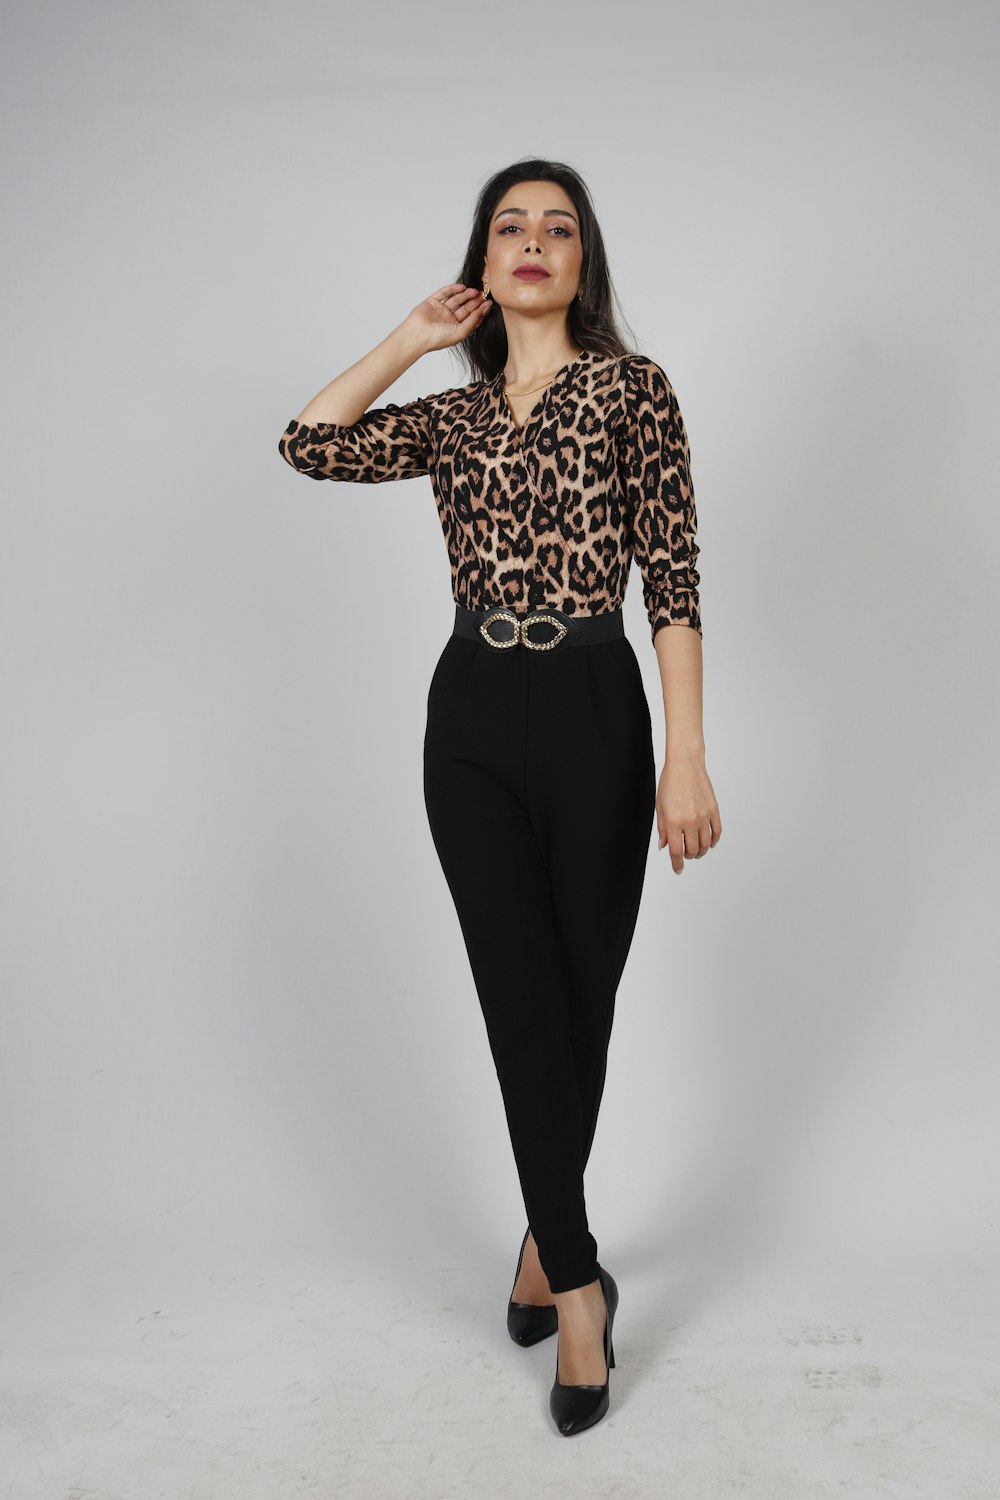 a woman wearing a leopard print shirt and black pants